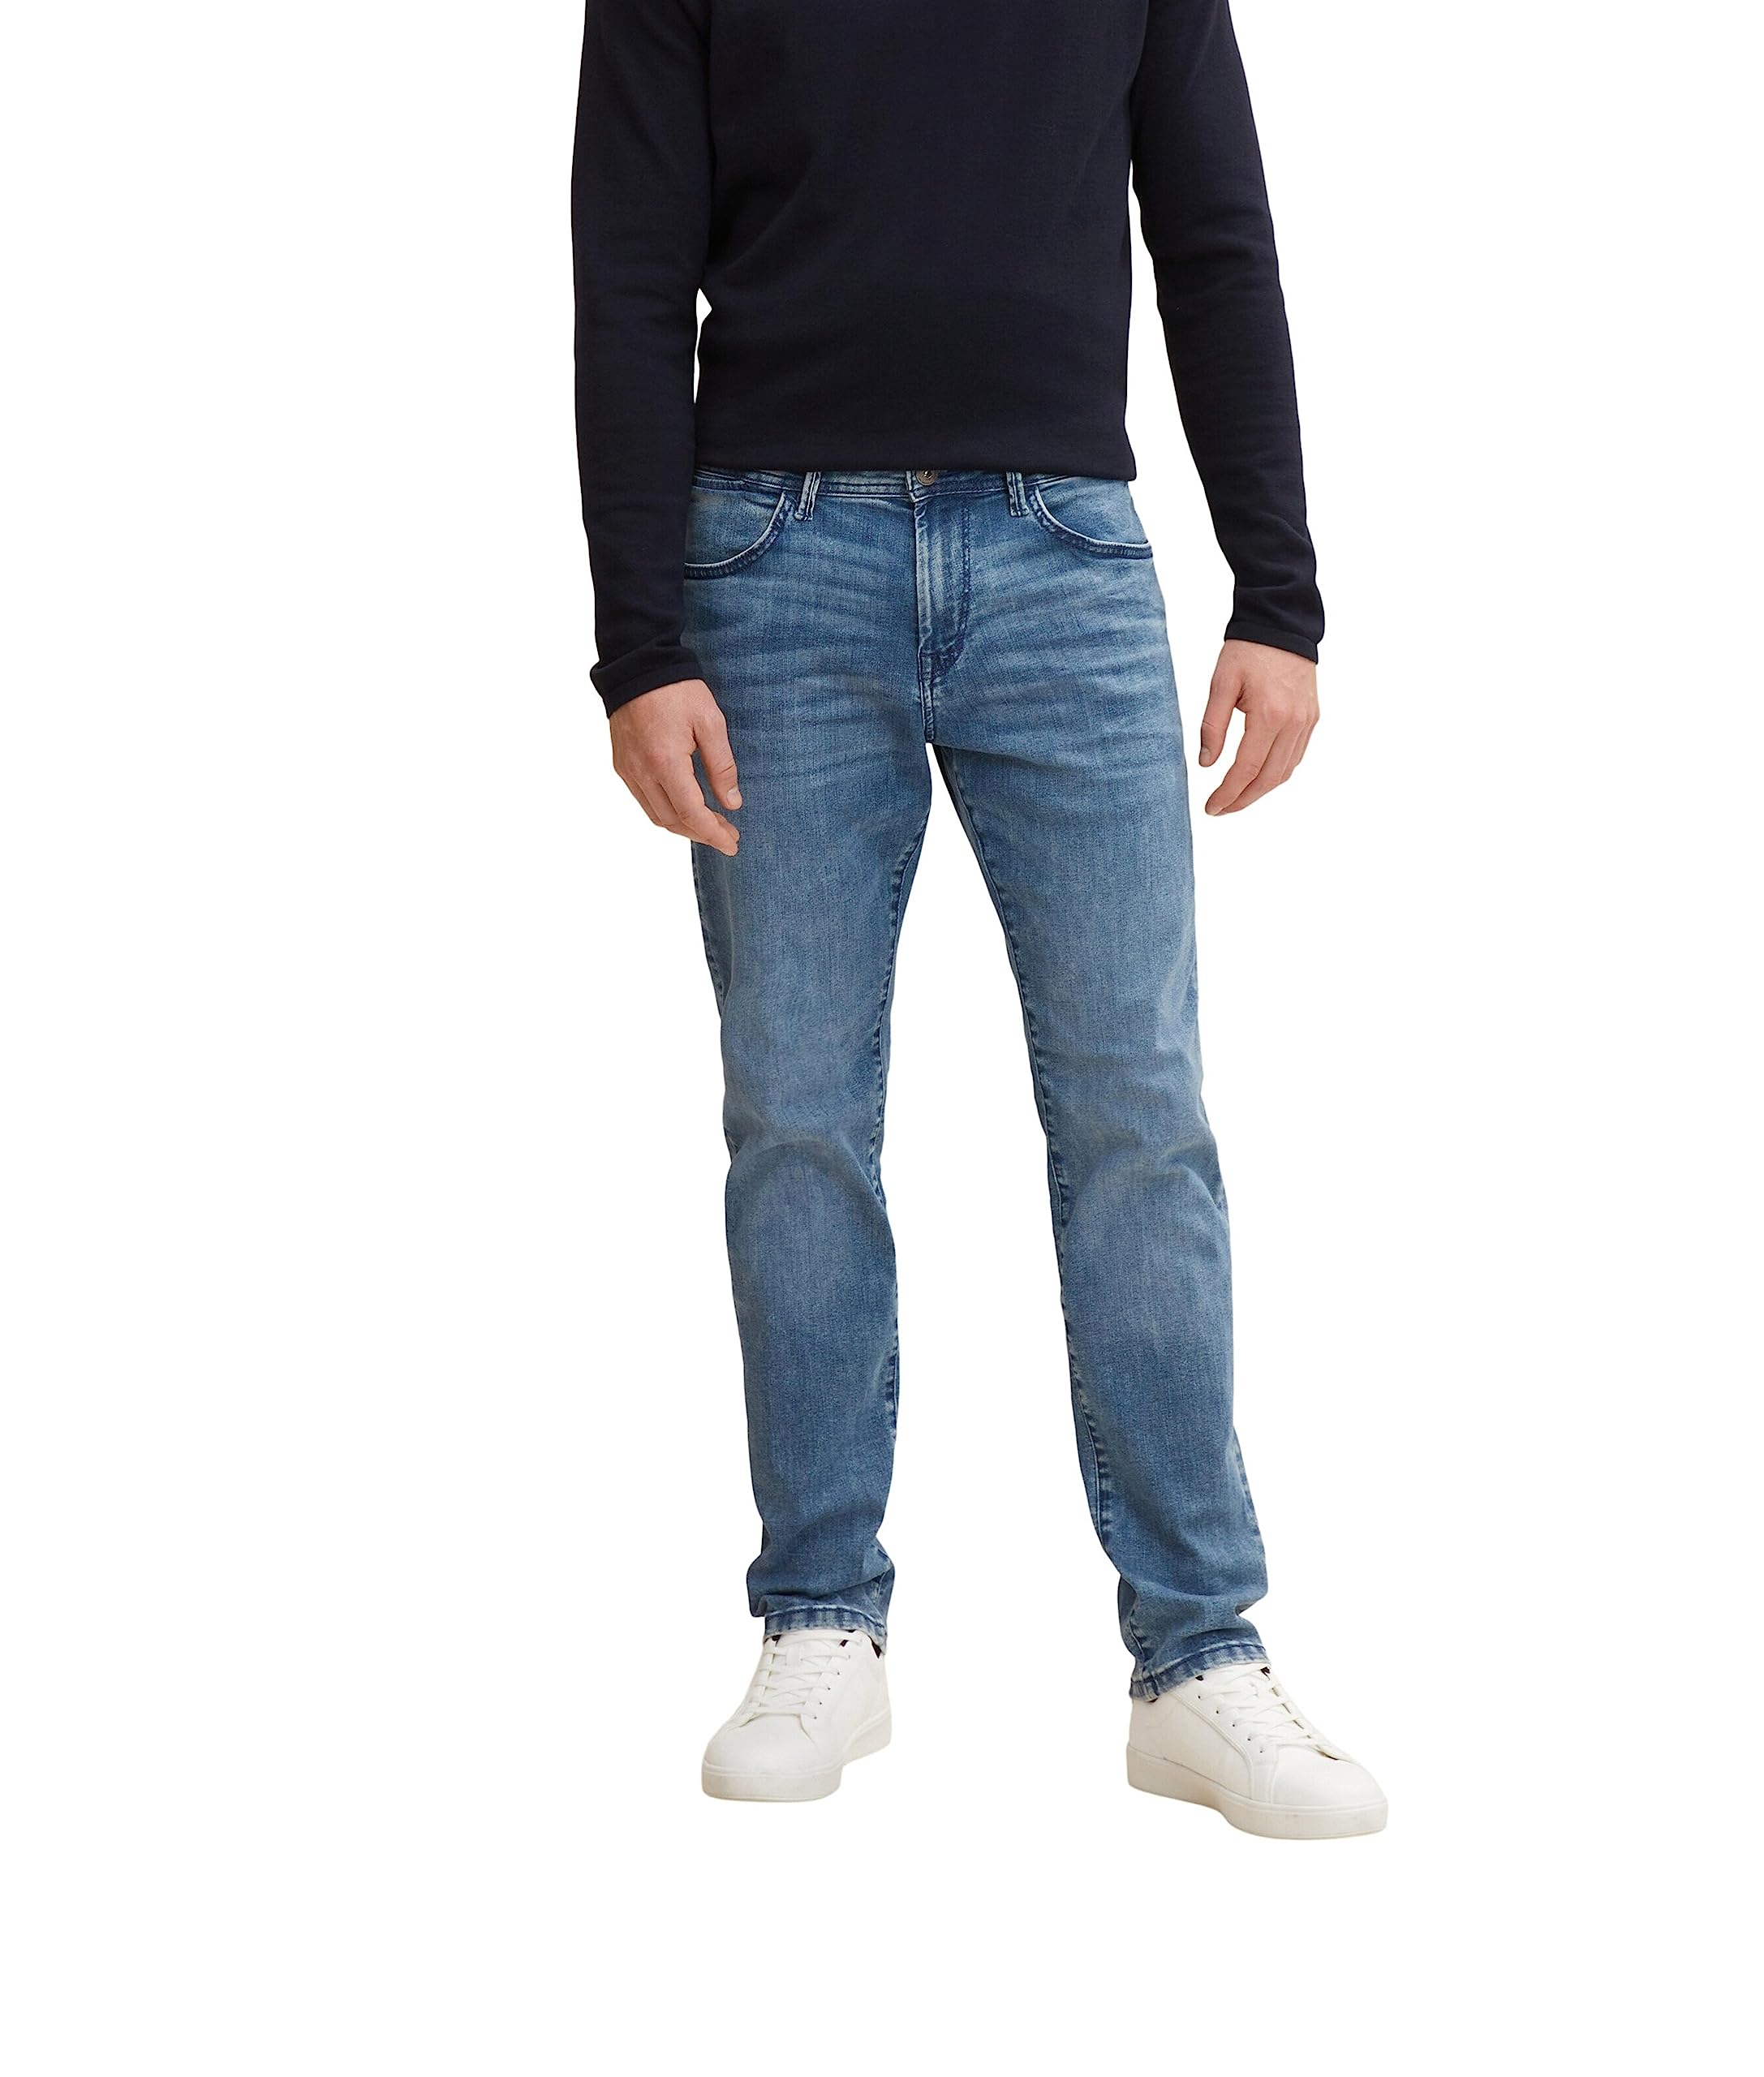 TOM TAILOR Herren 1032793 Josh Regular Slim Jeans Mit Freefit®-Stretch, 10118 - Used Light Stone Blue Denim, 40W / 34L EU